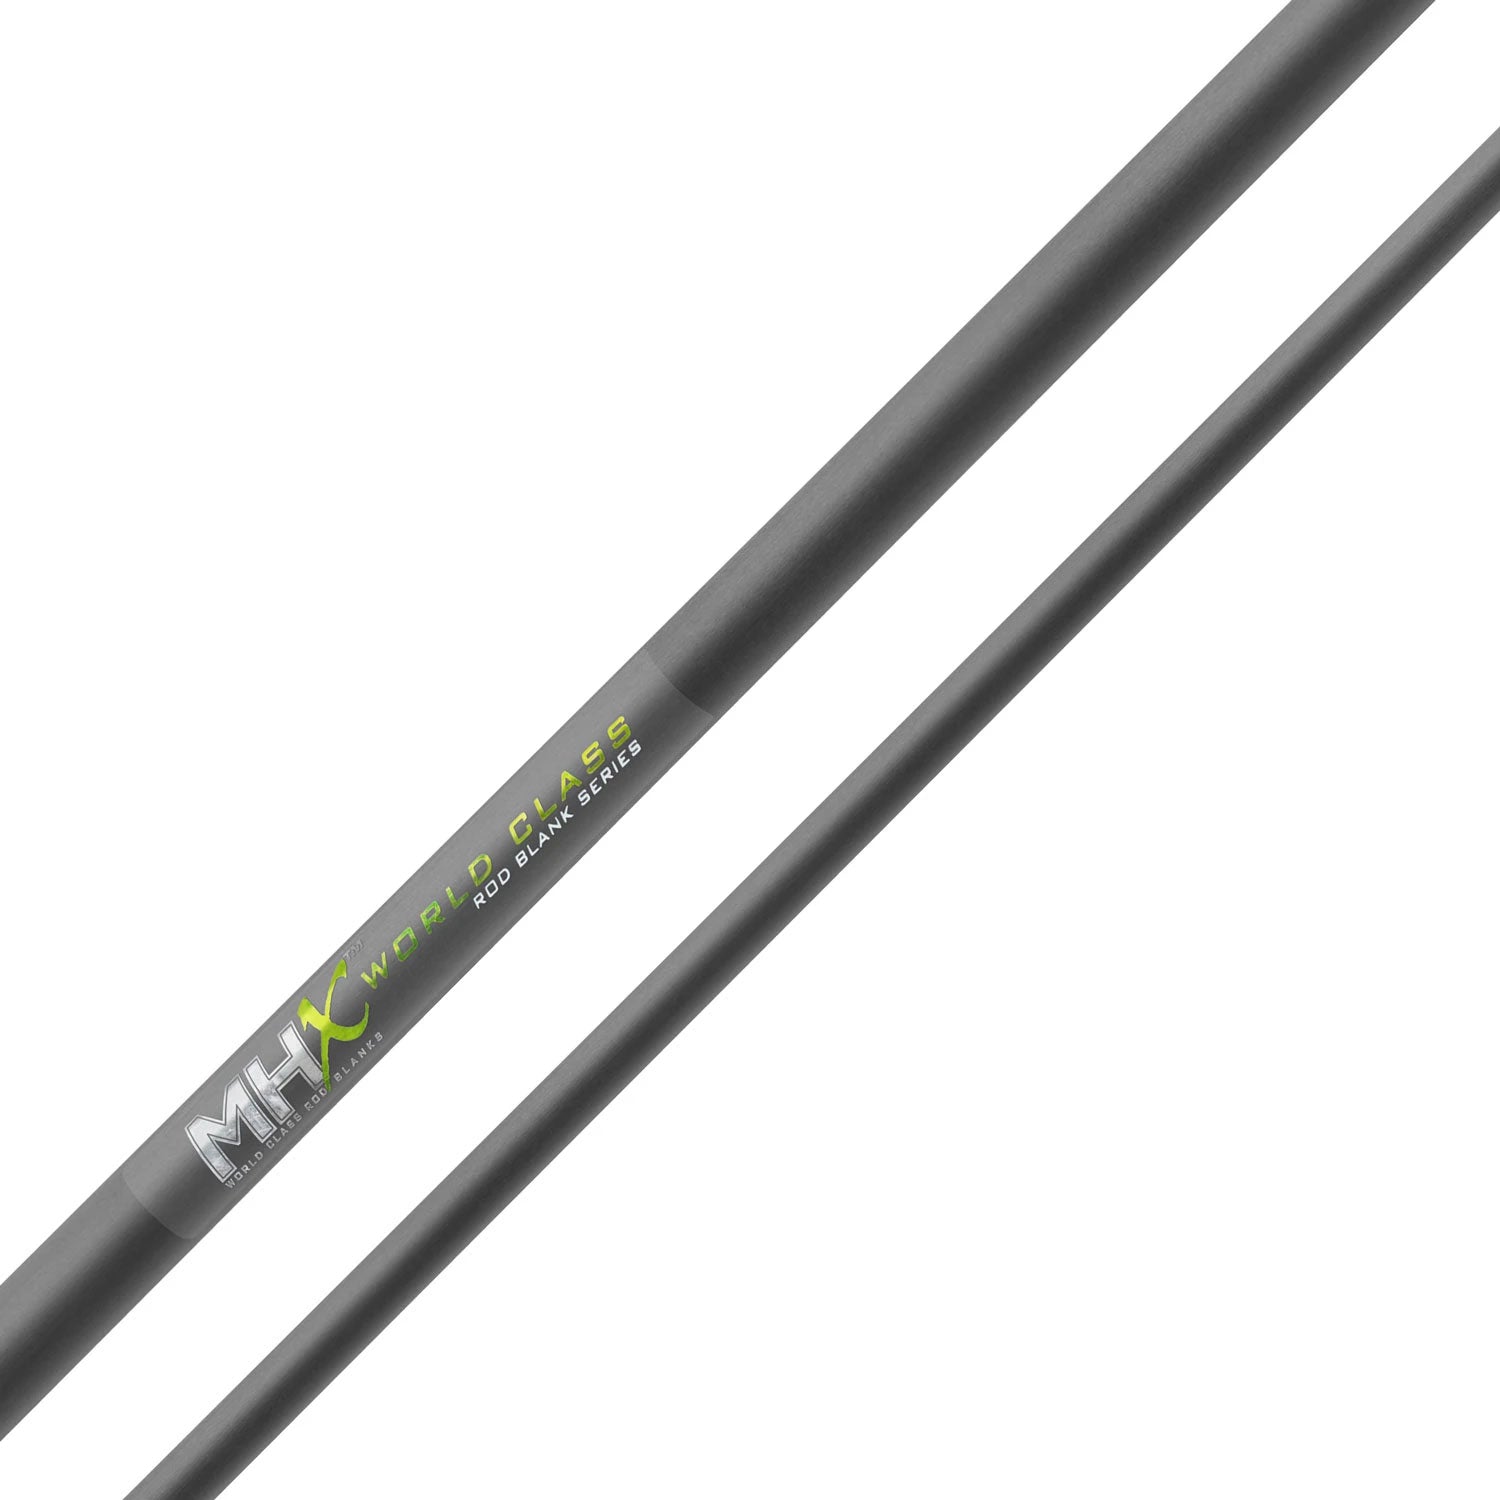 MHX 10'6" Med-Light Steelhead Rod Blank - ST1262-MHX